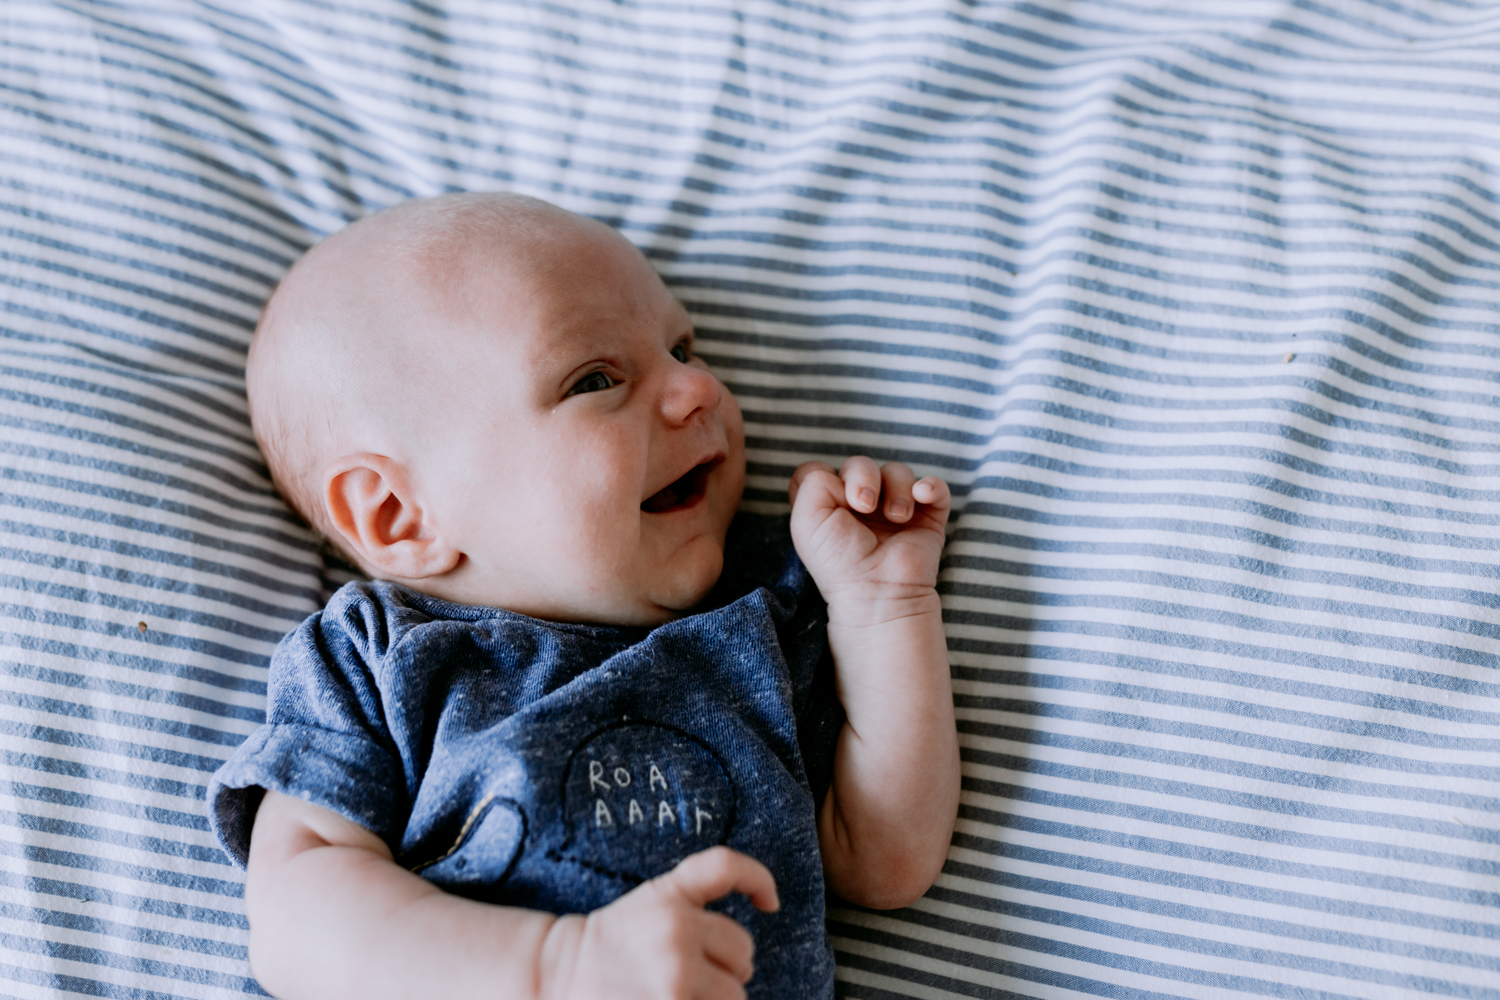 In home lifestyle newborn photo session | Newborn baby on bed |Hampshire newborn photography | Ewa Jones Photography